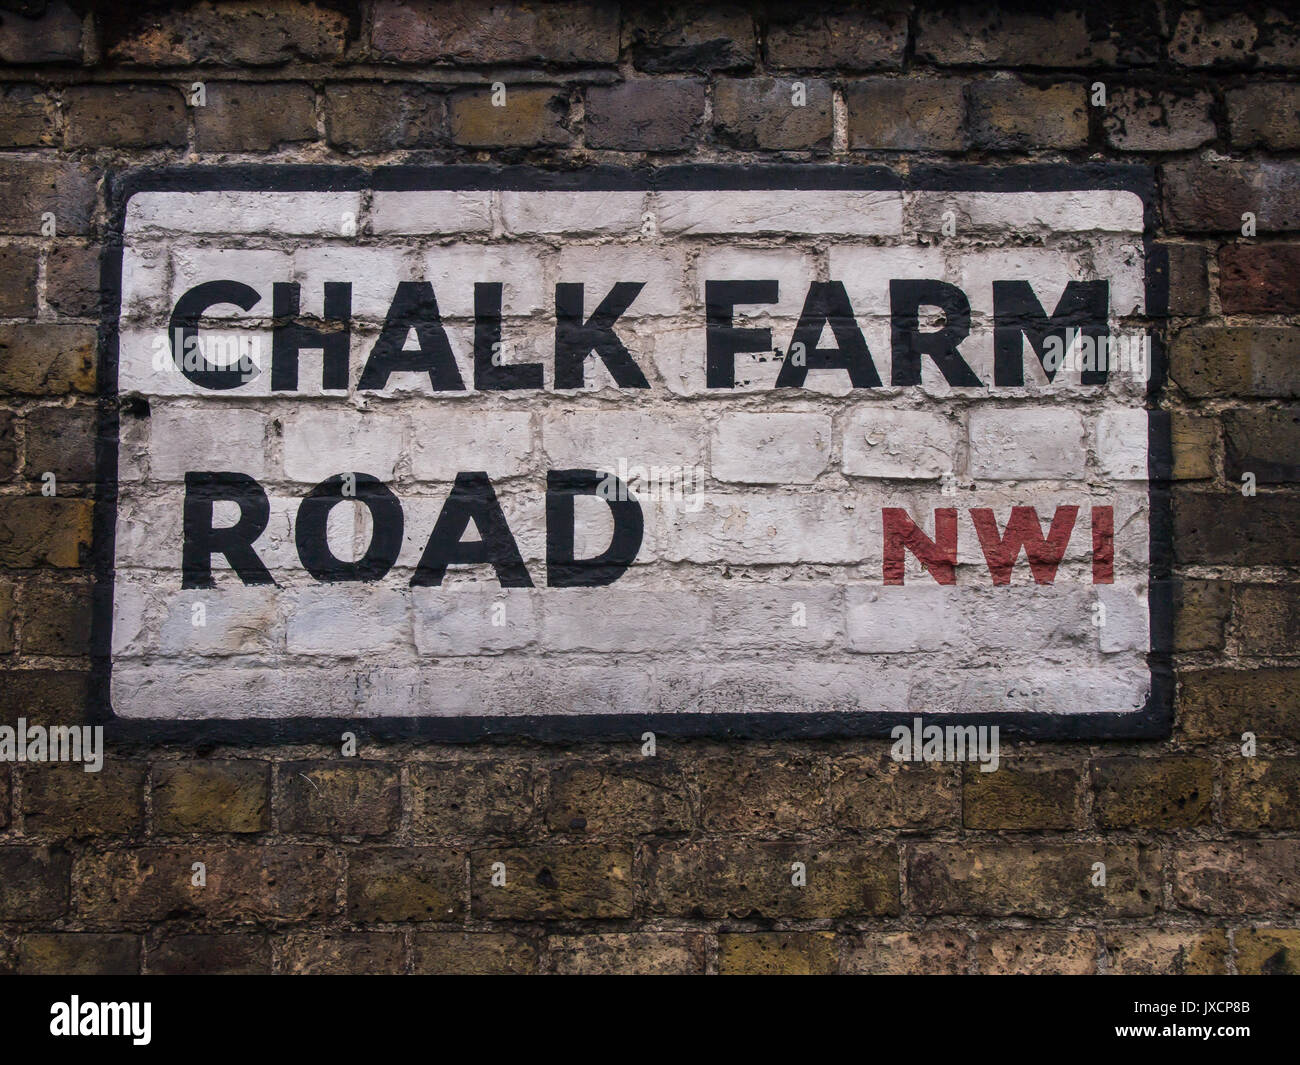 Juni 16, 2014. Chalk Farm Road street Schild an die Wand gemalt in London, England Stockfoto